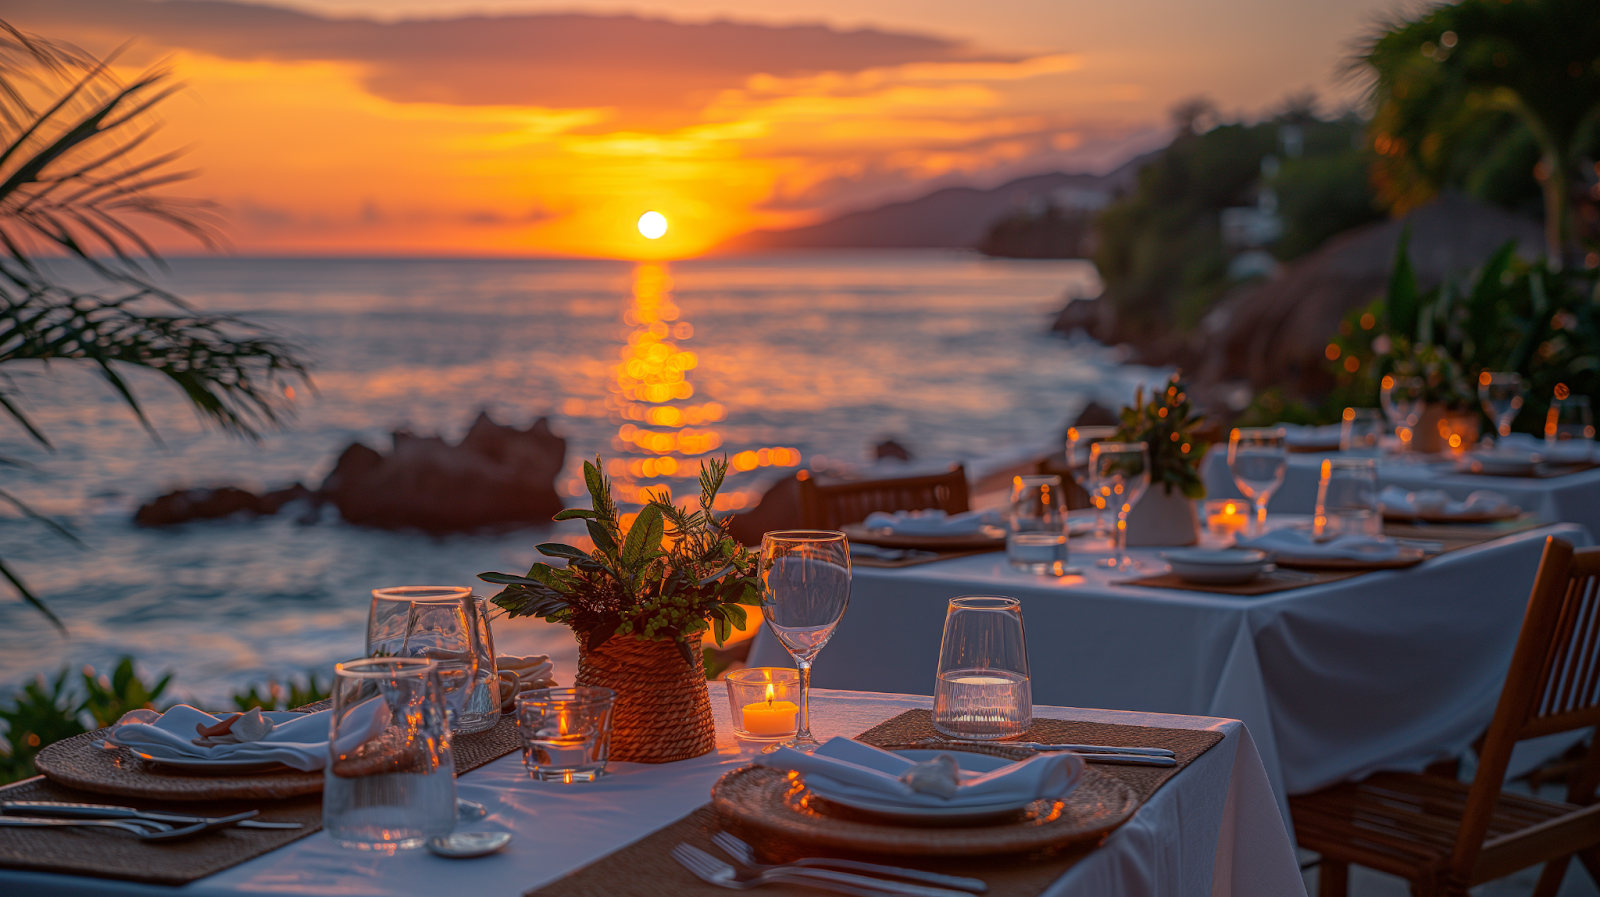 Elegant beachfront dining in Puerto Vallarta at sunset.